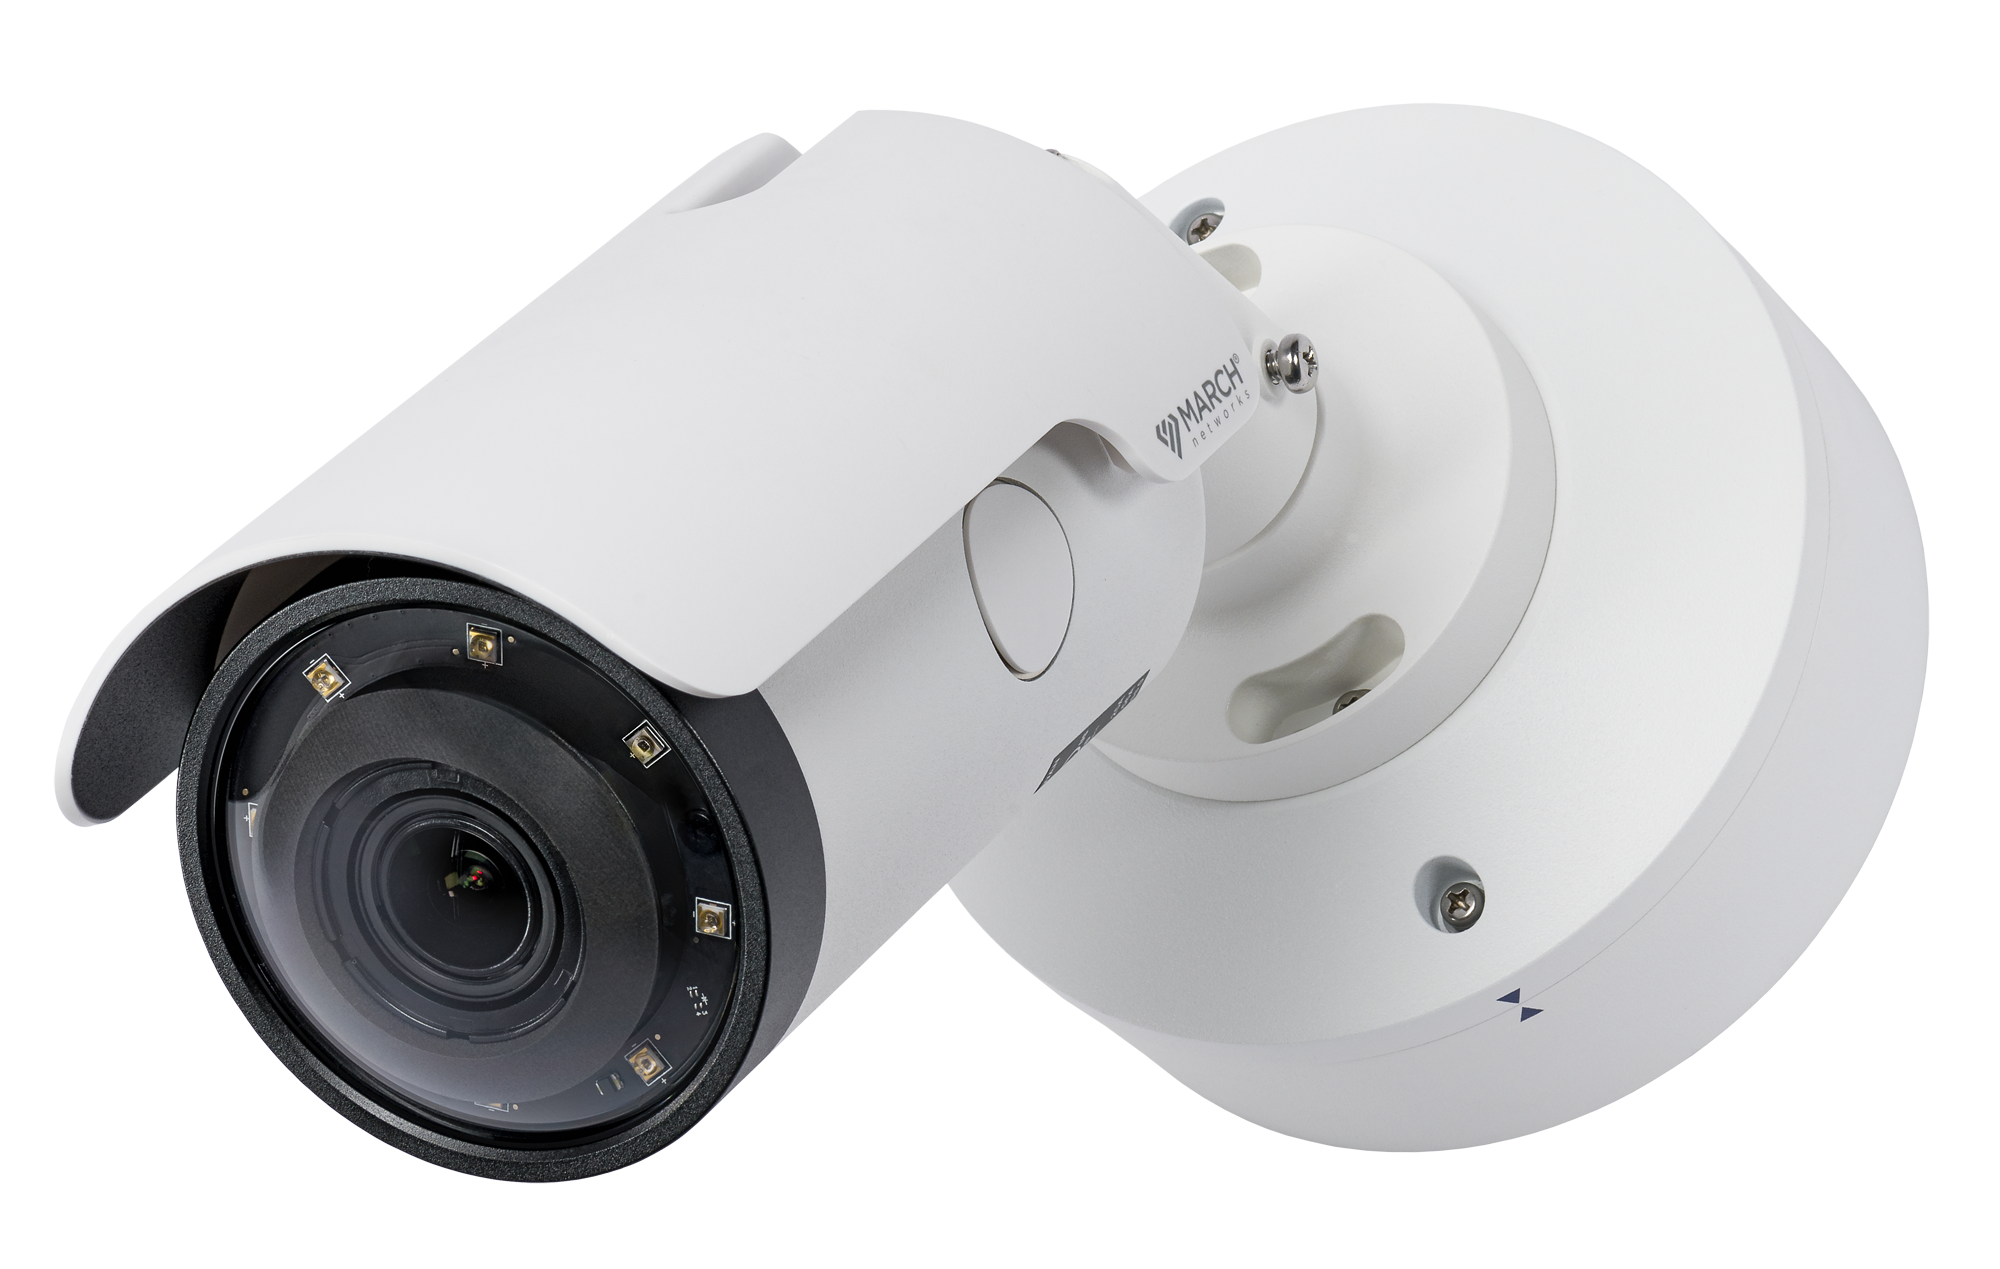 The SE4 IR DuraBullet security camera